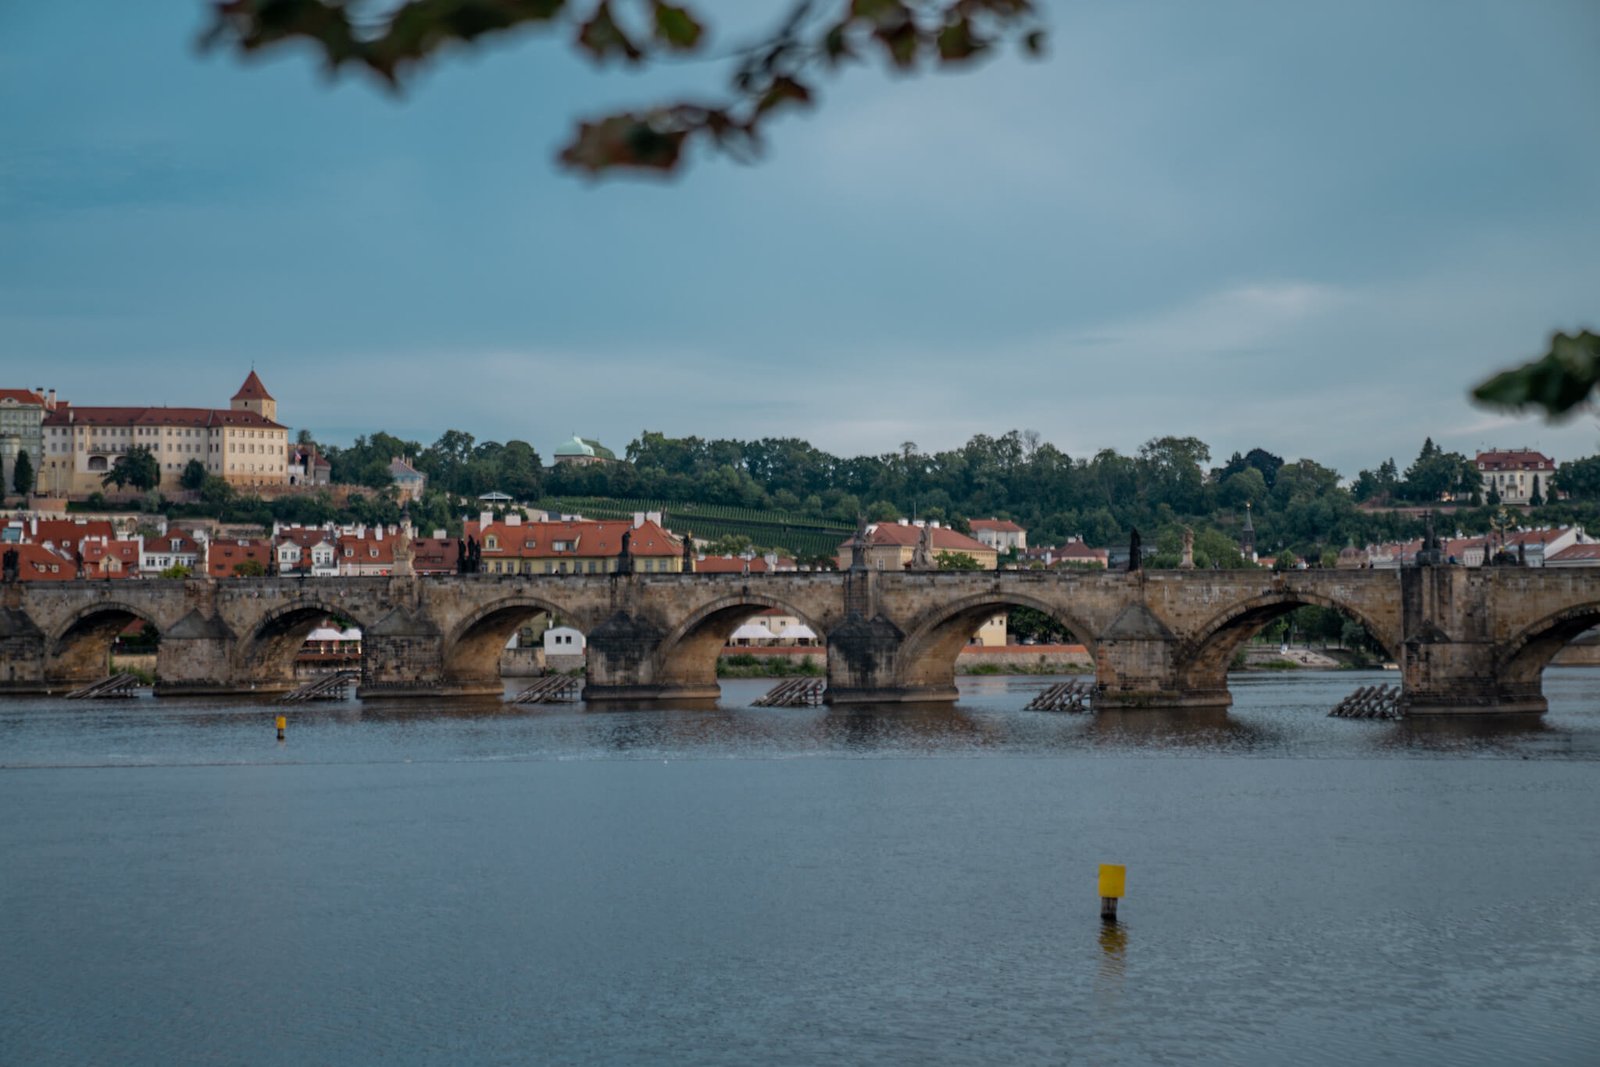 Charles Bridge, 1 day in Prague